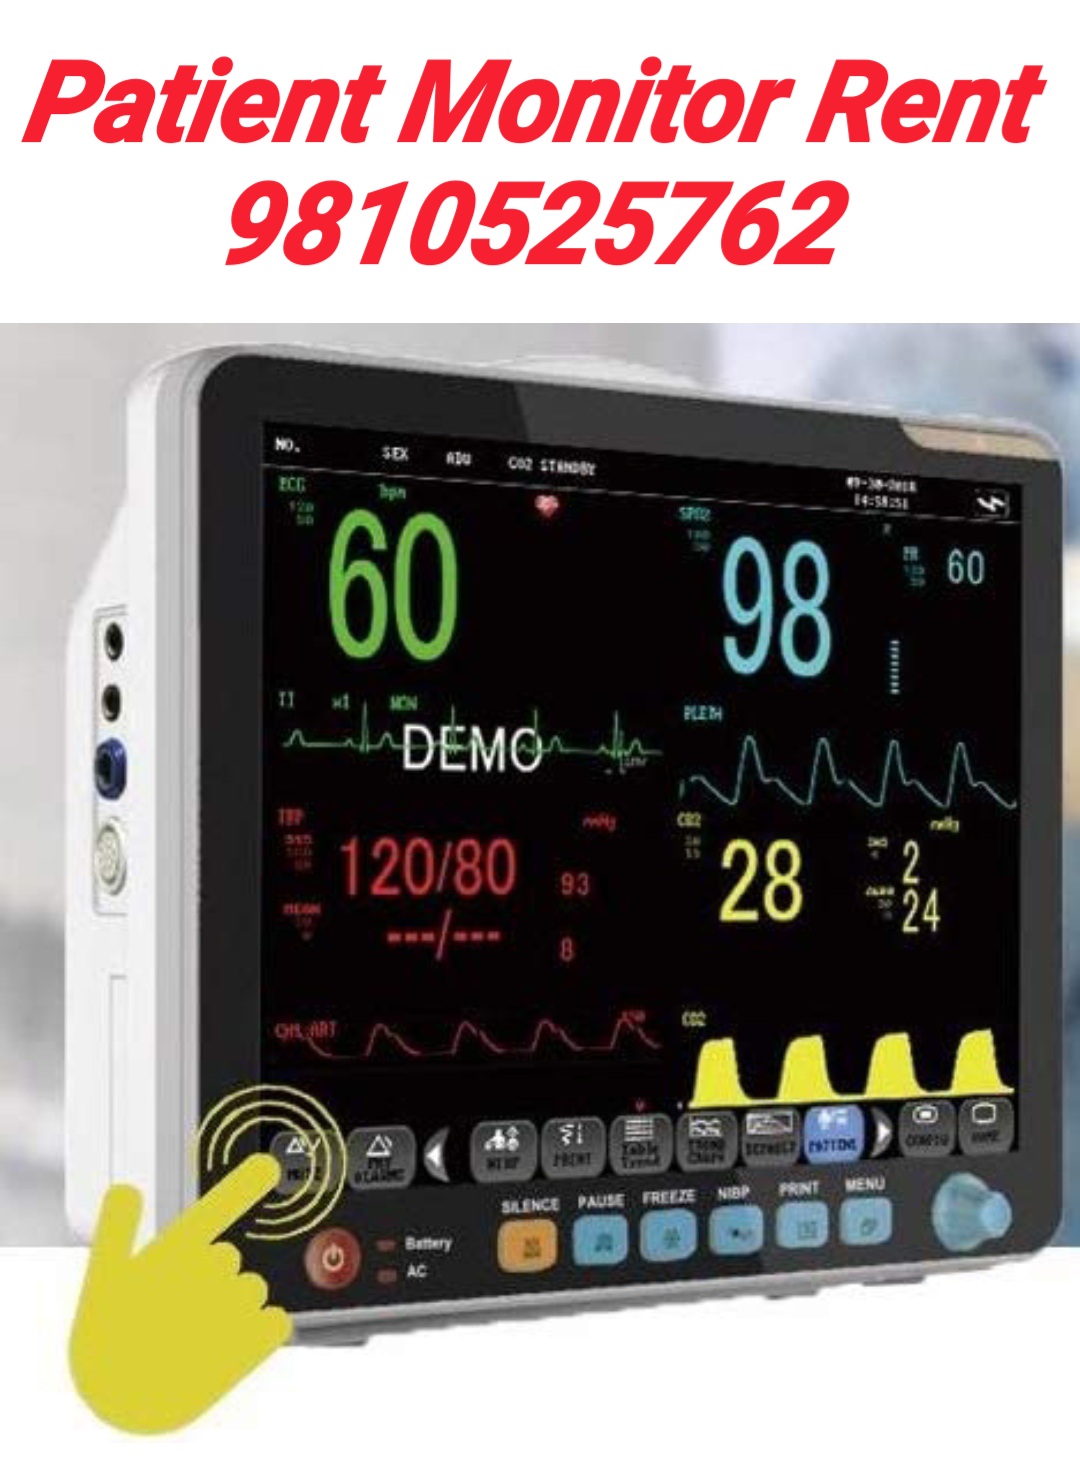 Patient Monitor For Rent Delhi Noida 9810525762